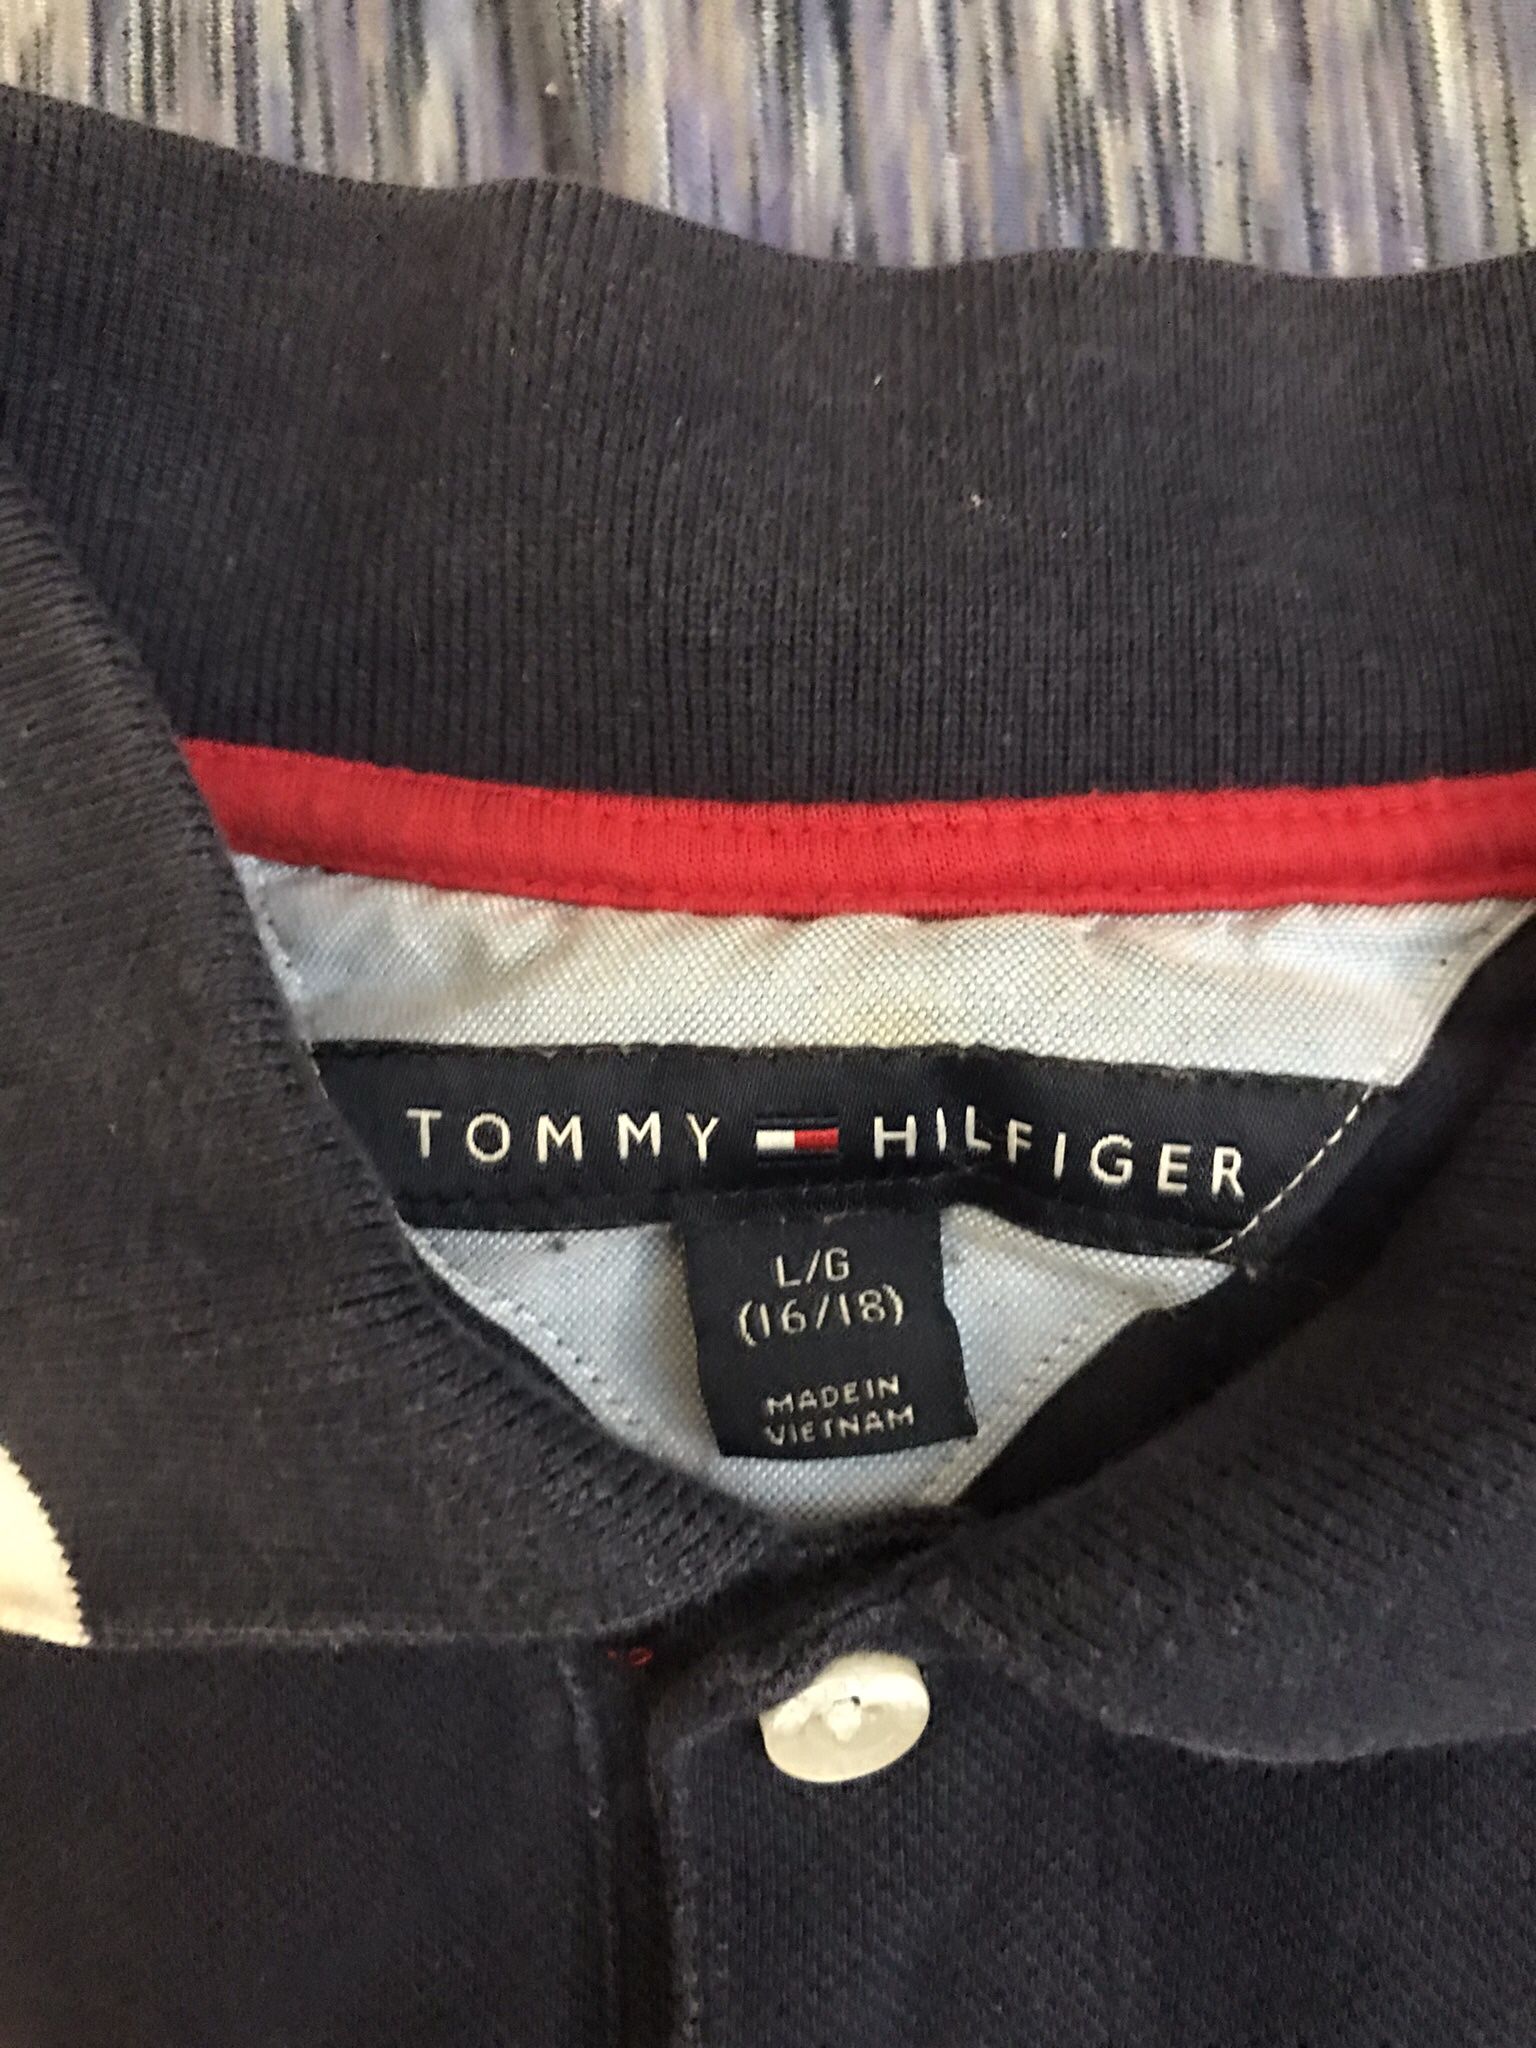 Tommy Hilfiger Dress Shirt 